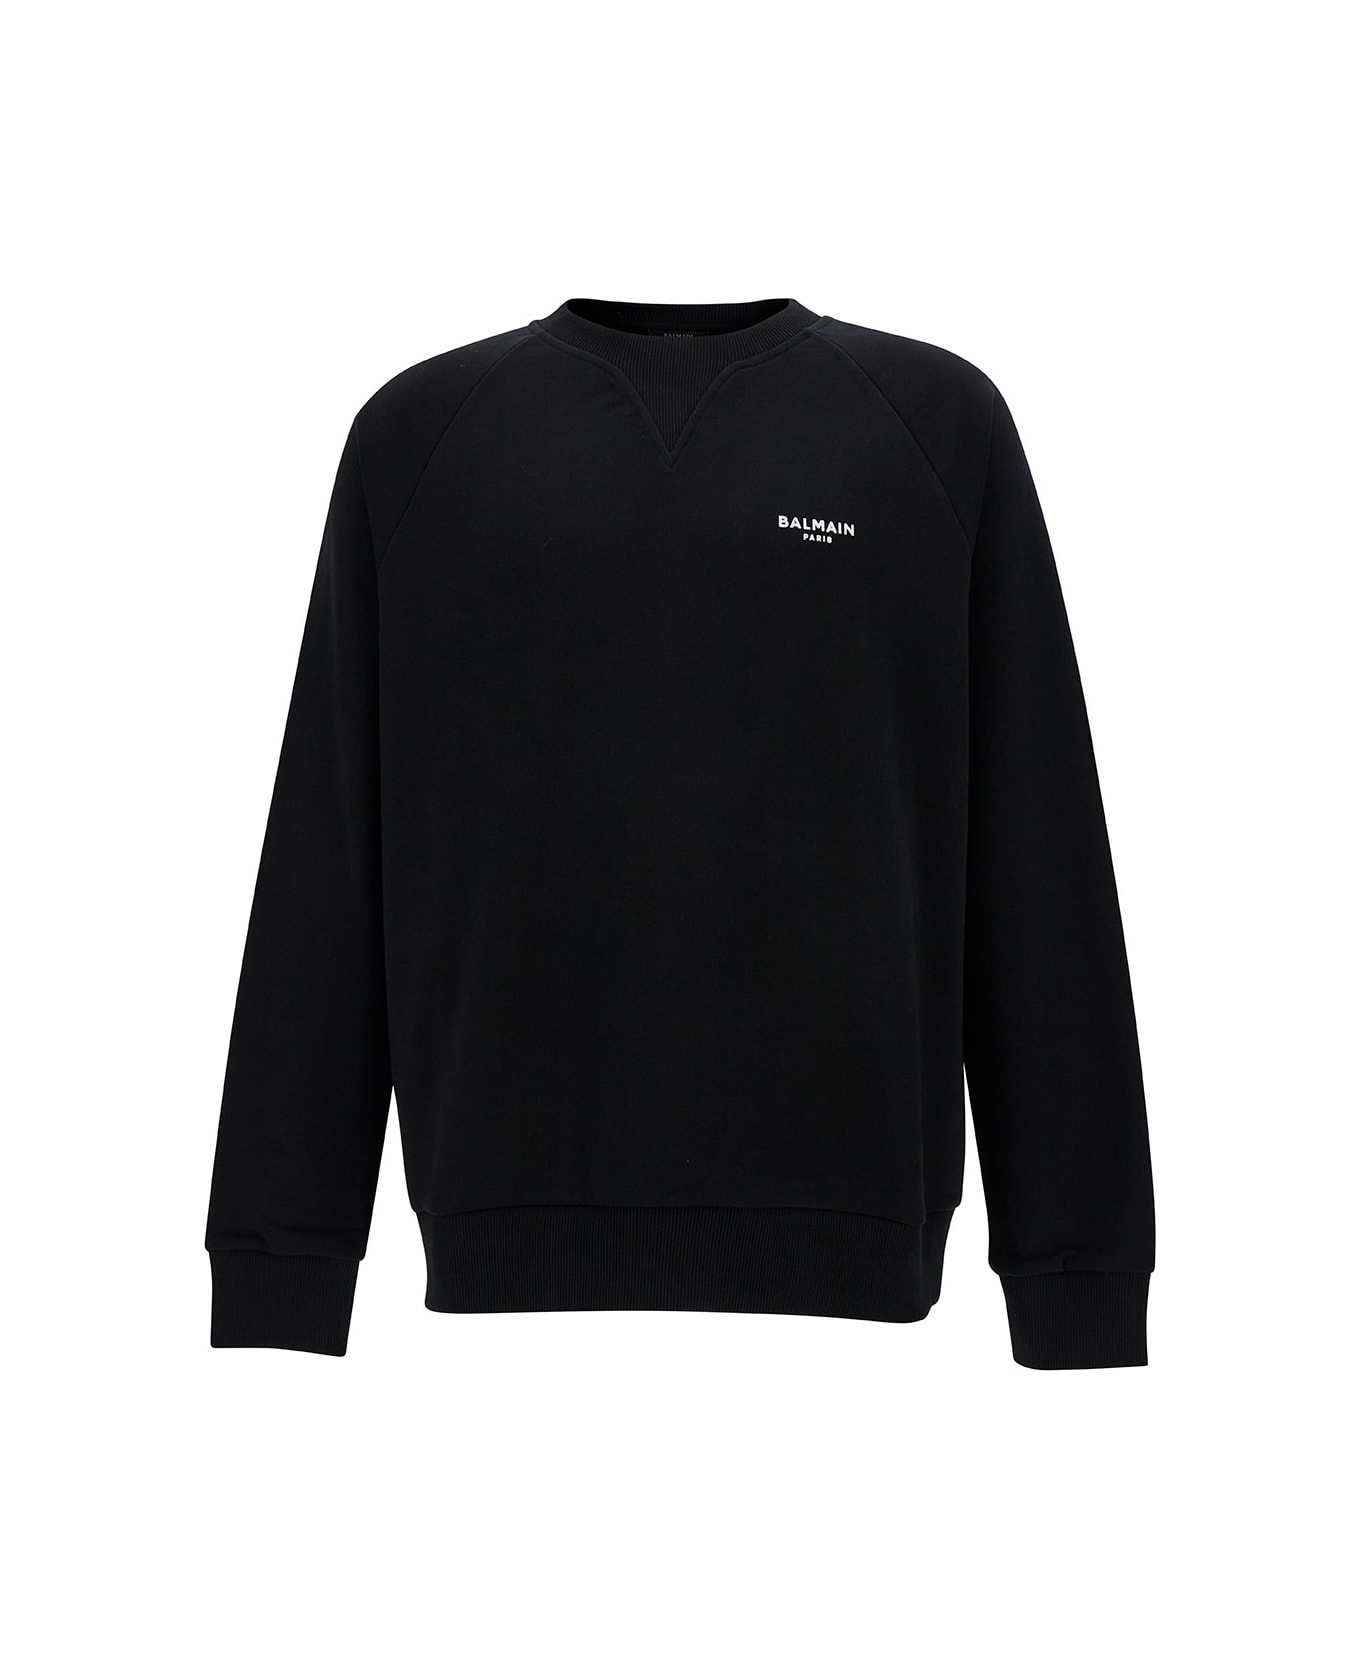 Balmain Black Crewneck Sweatshirt With Contrasting Logo Print At The Front In Cotton Man - Black